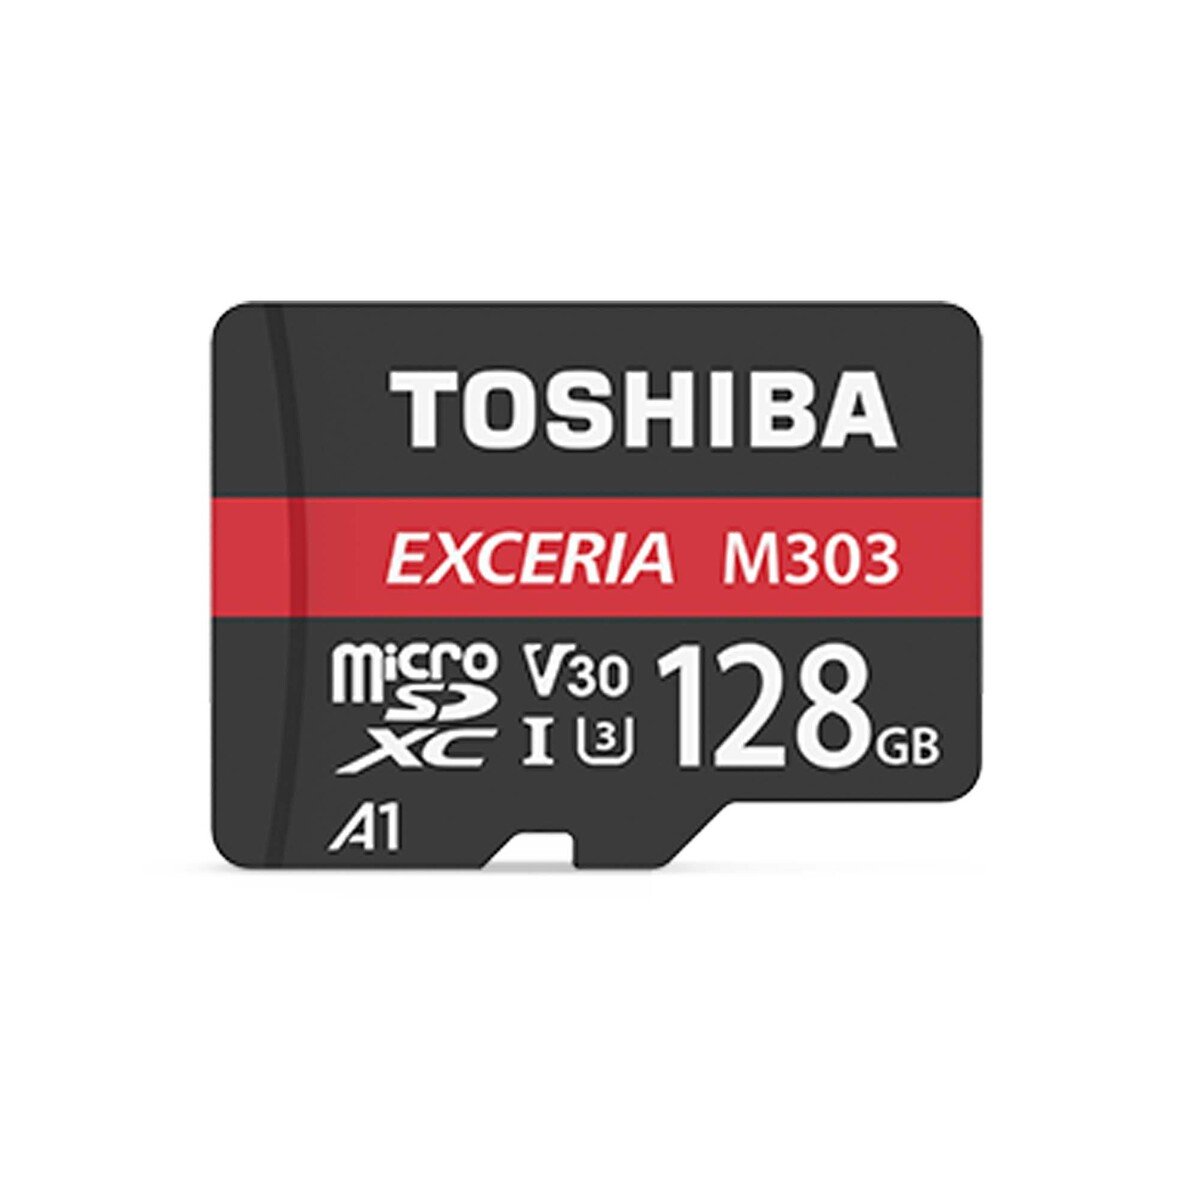 Toshiba MSD Card NM303R01280 128GB